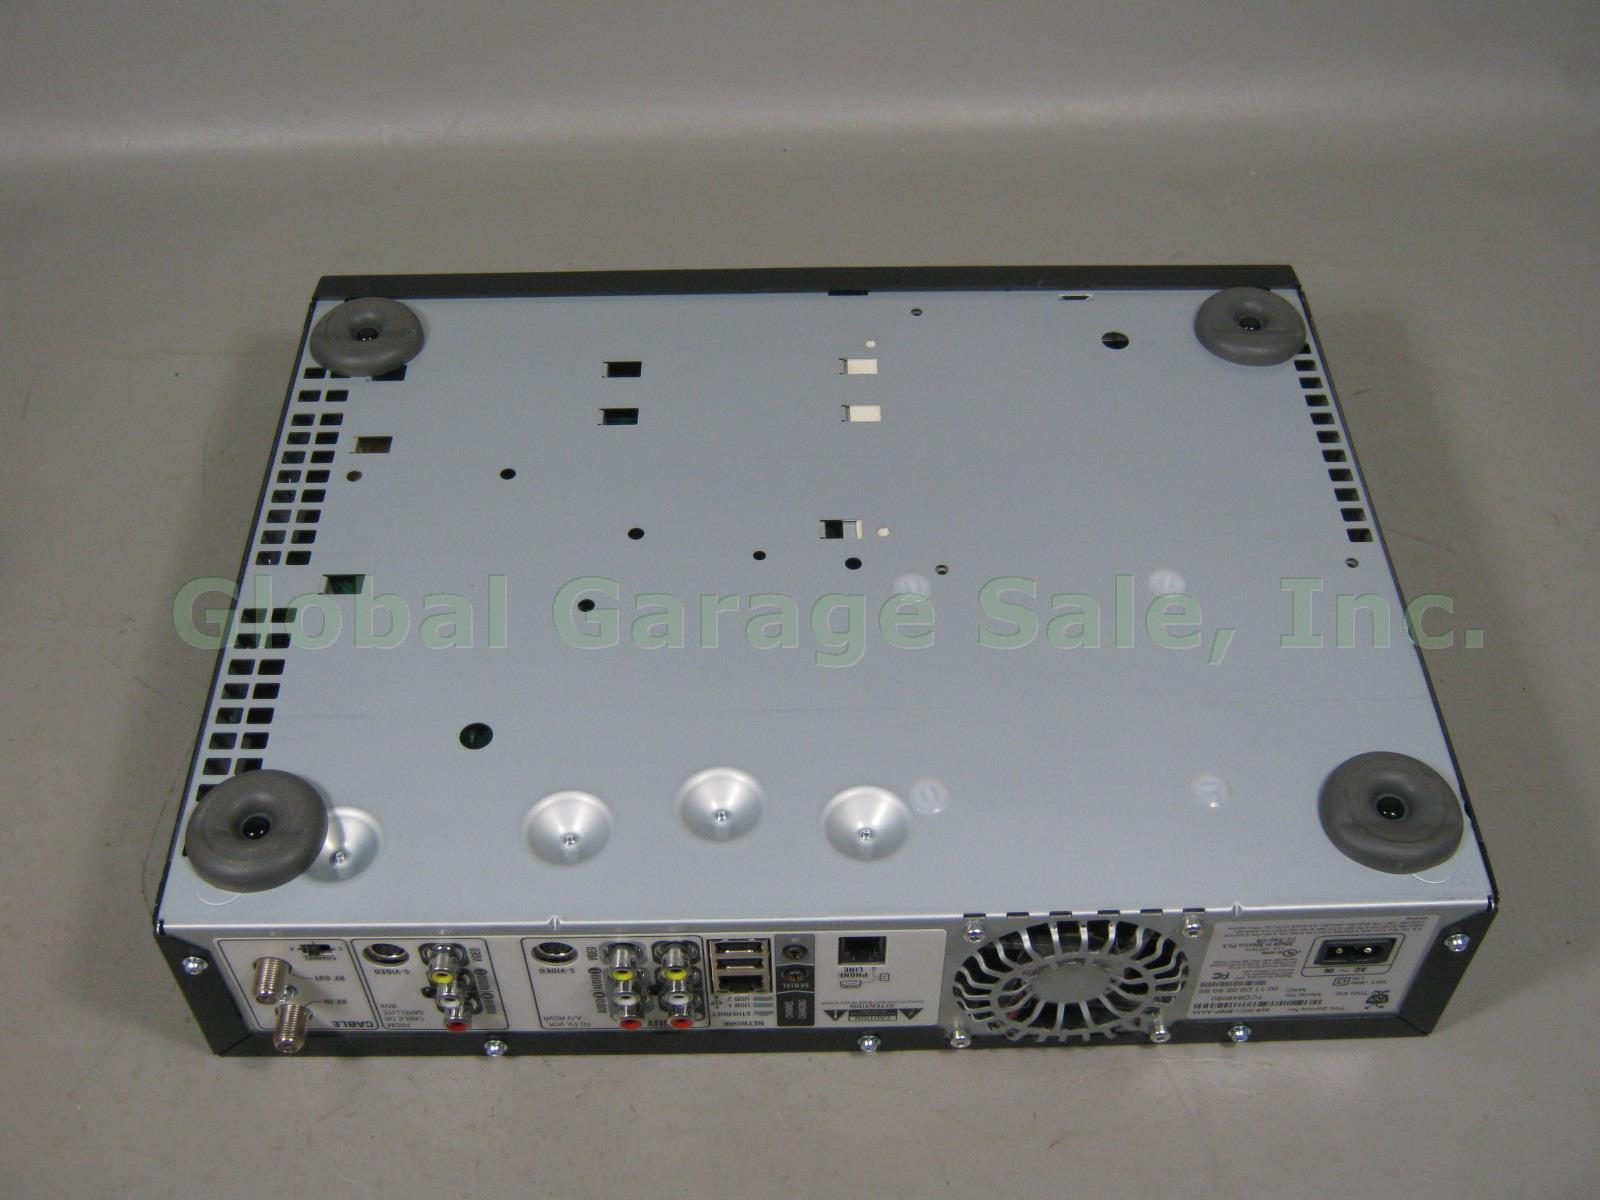 Tivo Series 2 DT DVR Digital Video Recorder TCD649080 W/ Lifetime Service Bundle 3